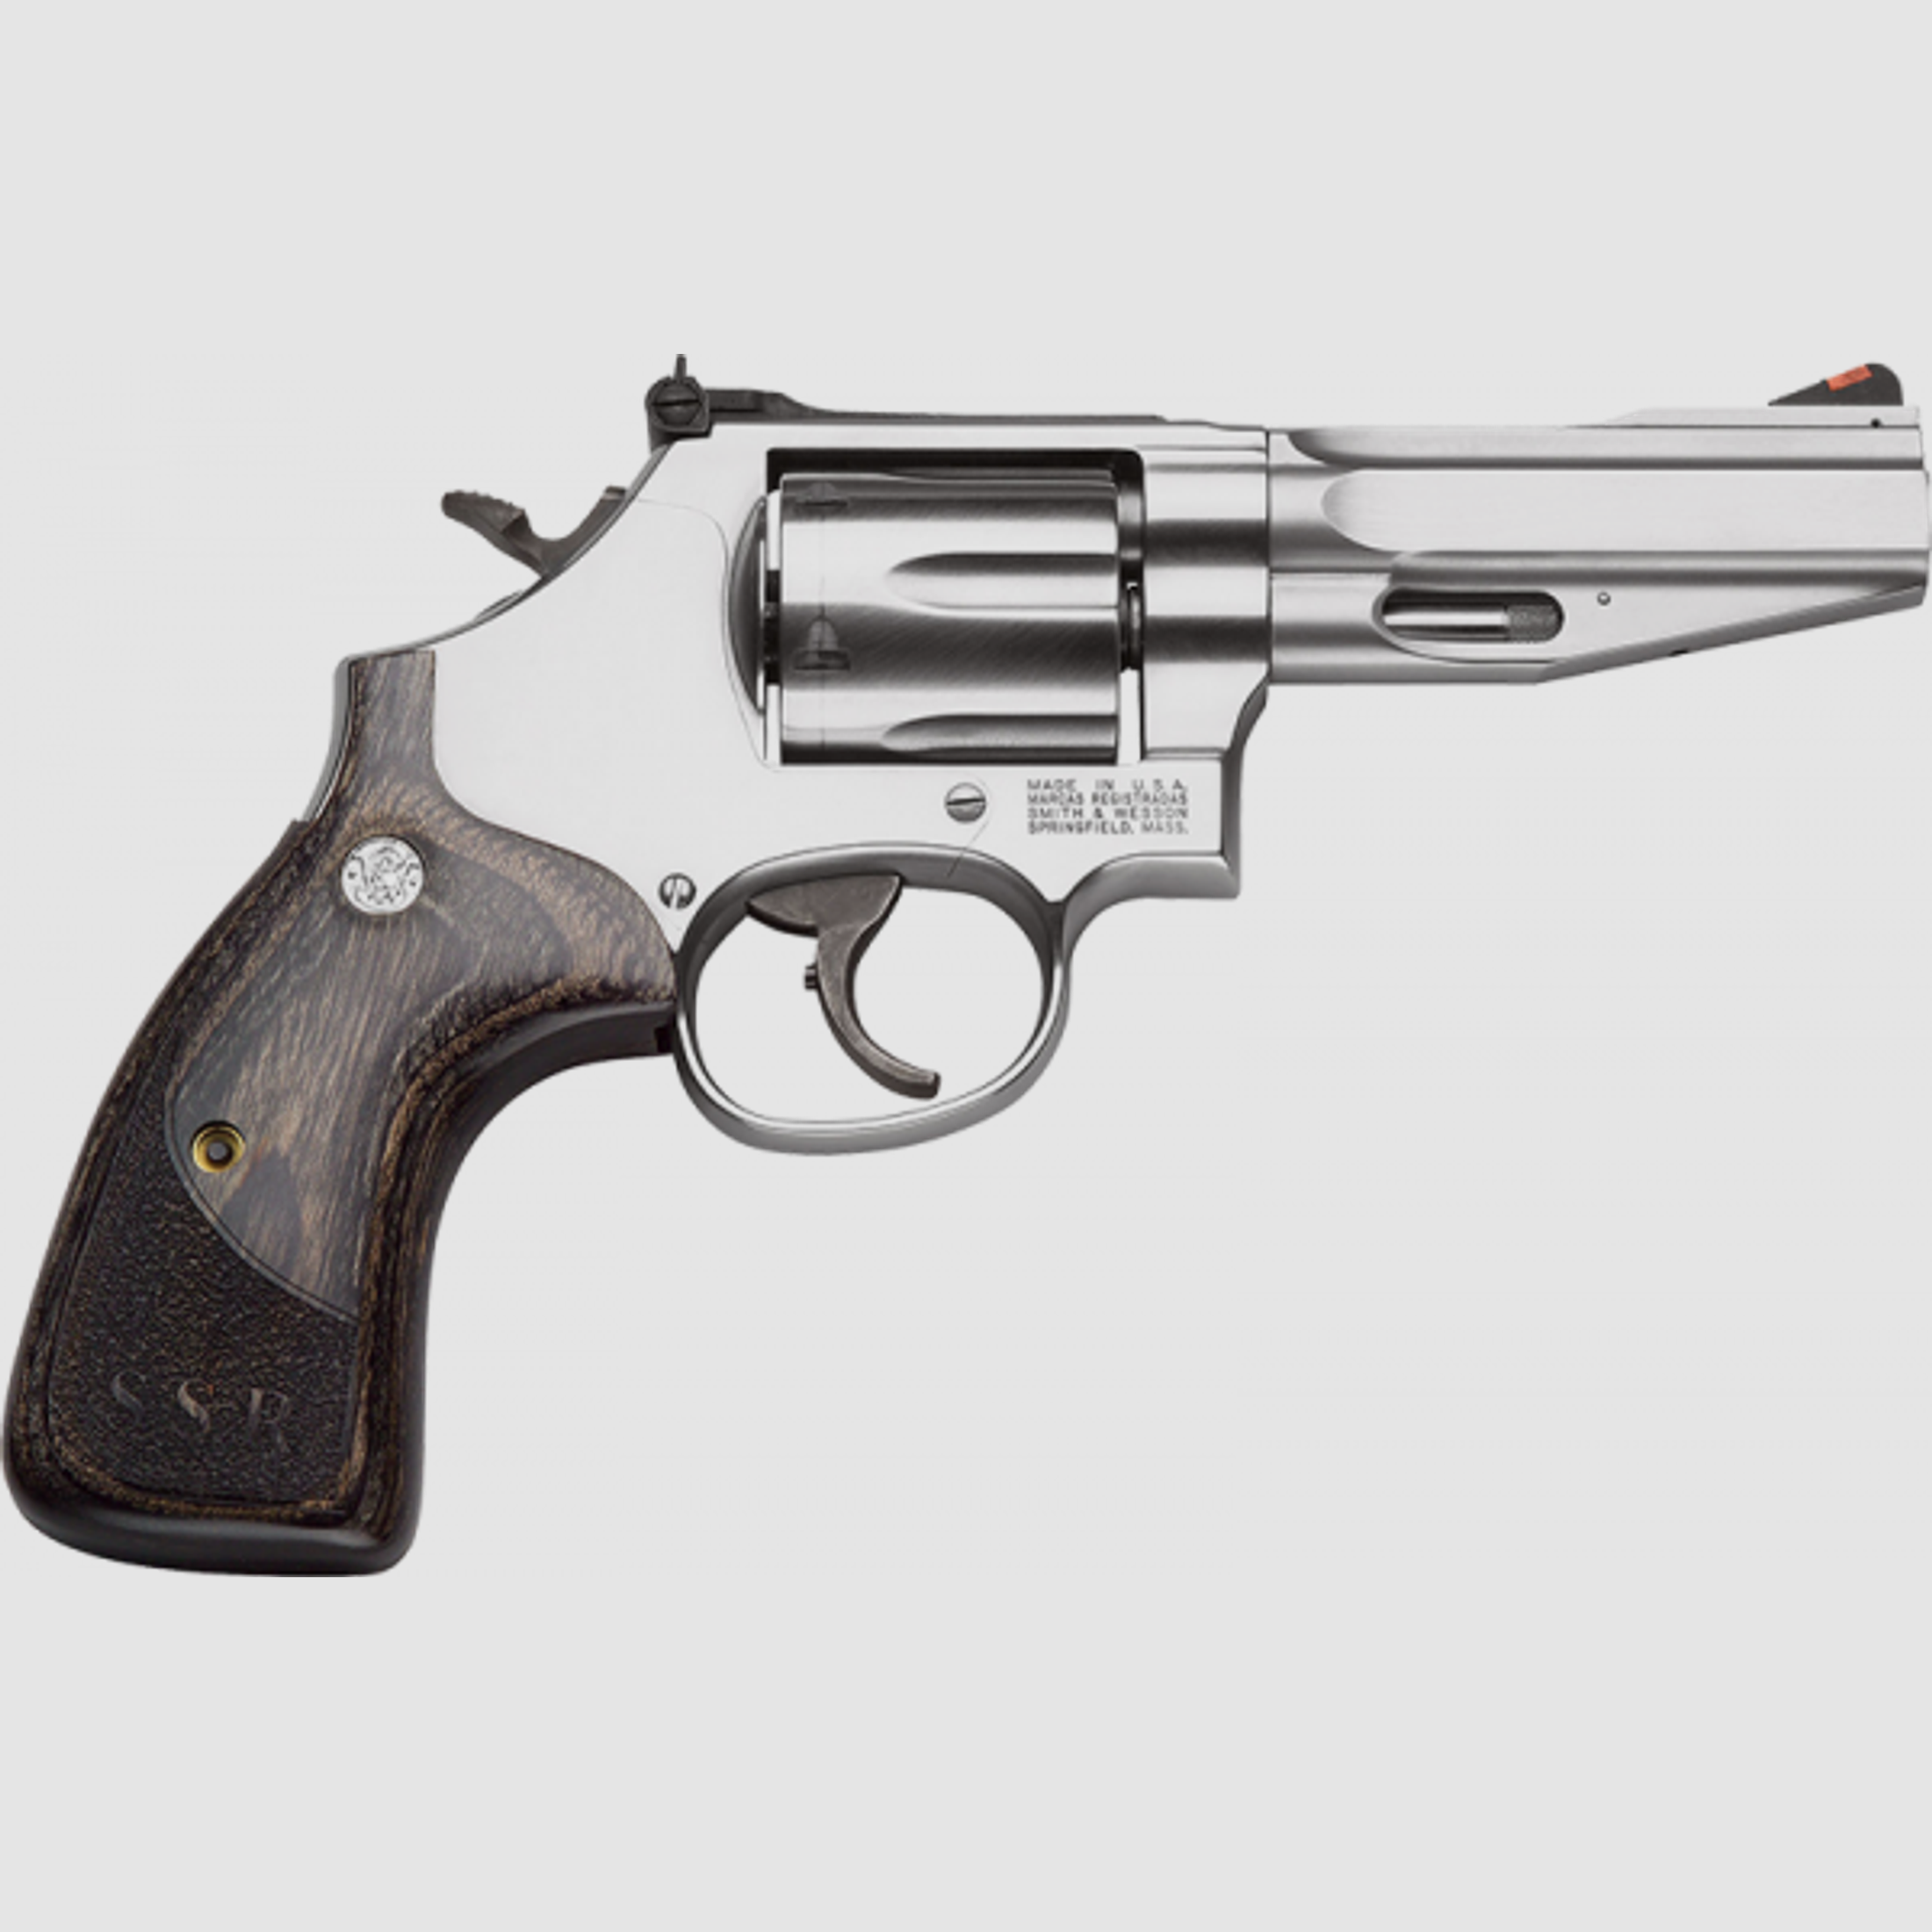 Smith & Wesson Model 686 Pro Serie Performance Center SSR Revolver